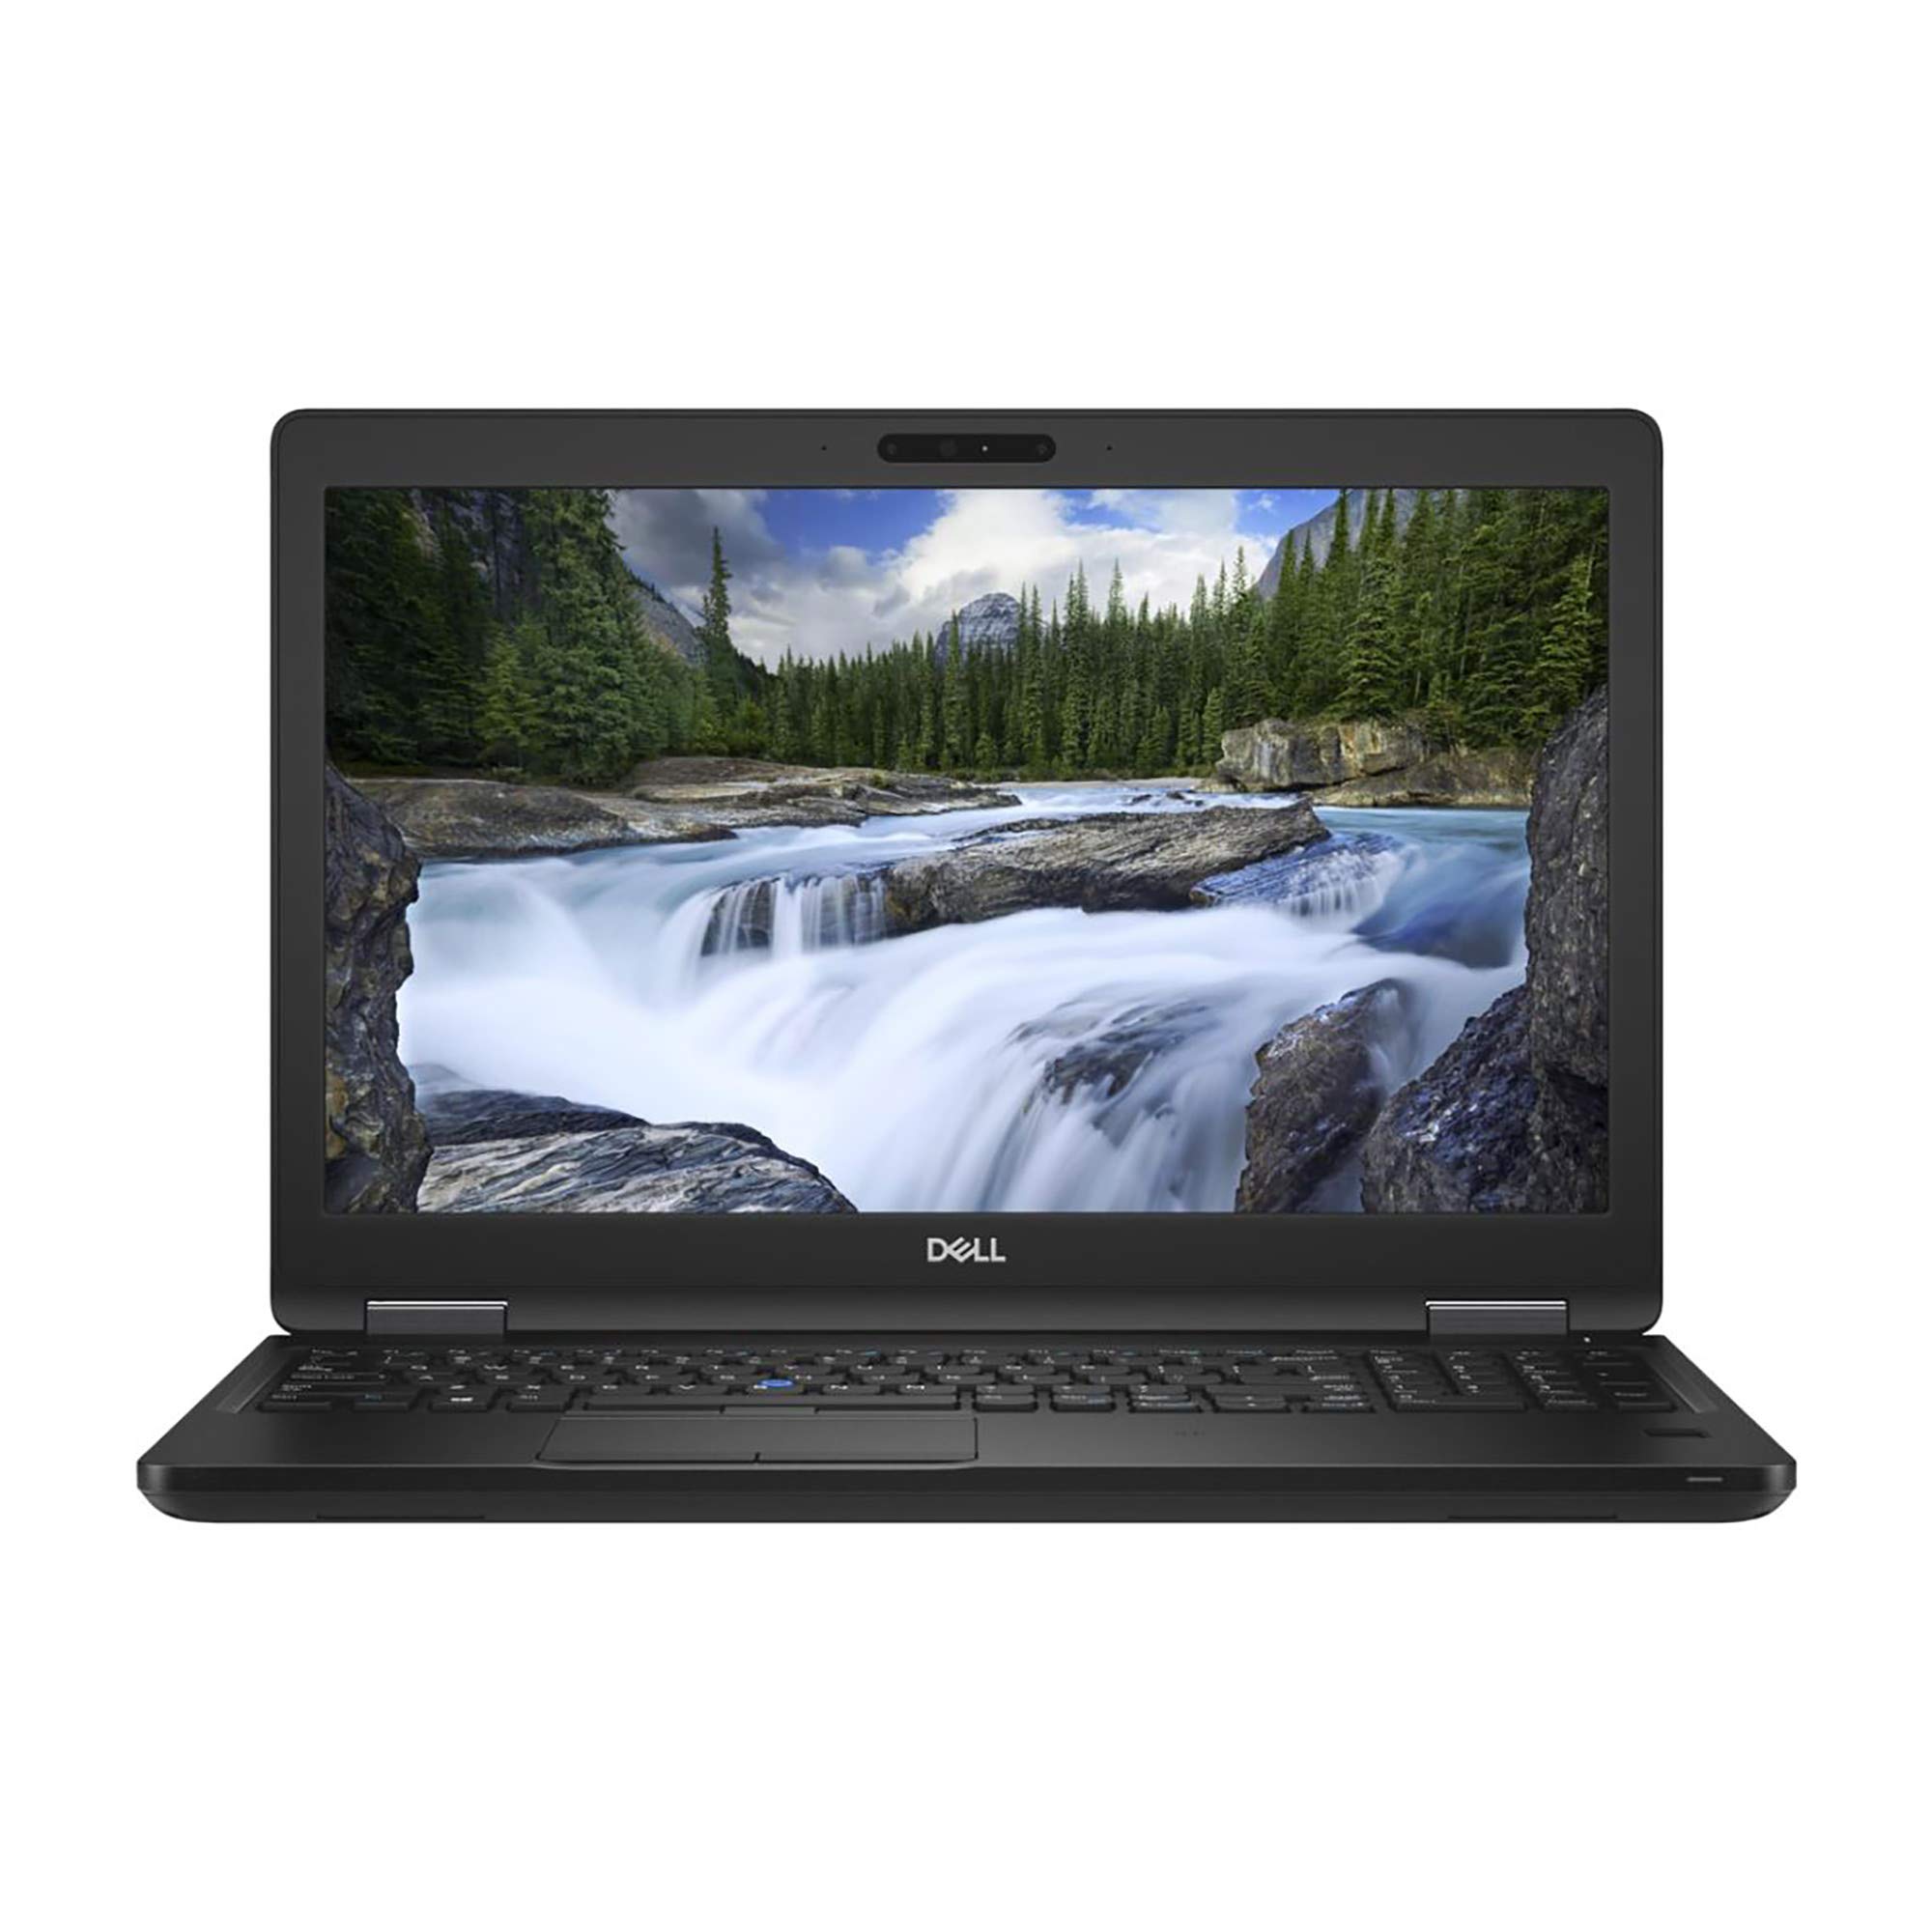 Dell Latitude 5591 1920 x 1080 LCD Laptop with Intel Core i5-8400H 2.5 GHz Quad-Core, 8GB RAM, 256GB SSD, 15.6